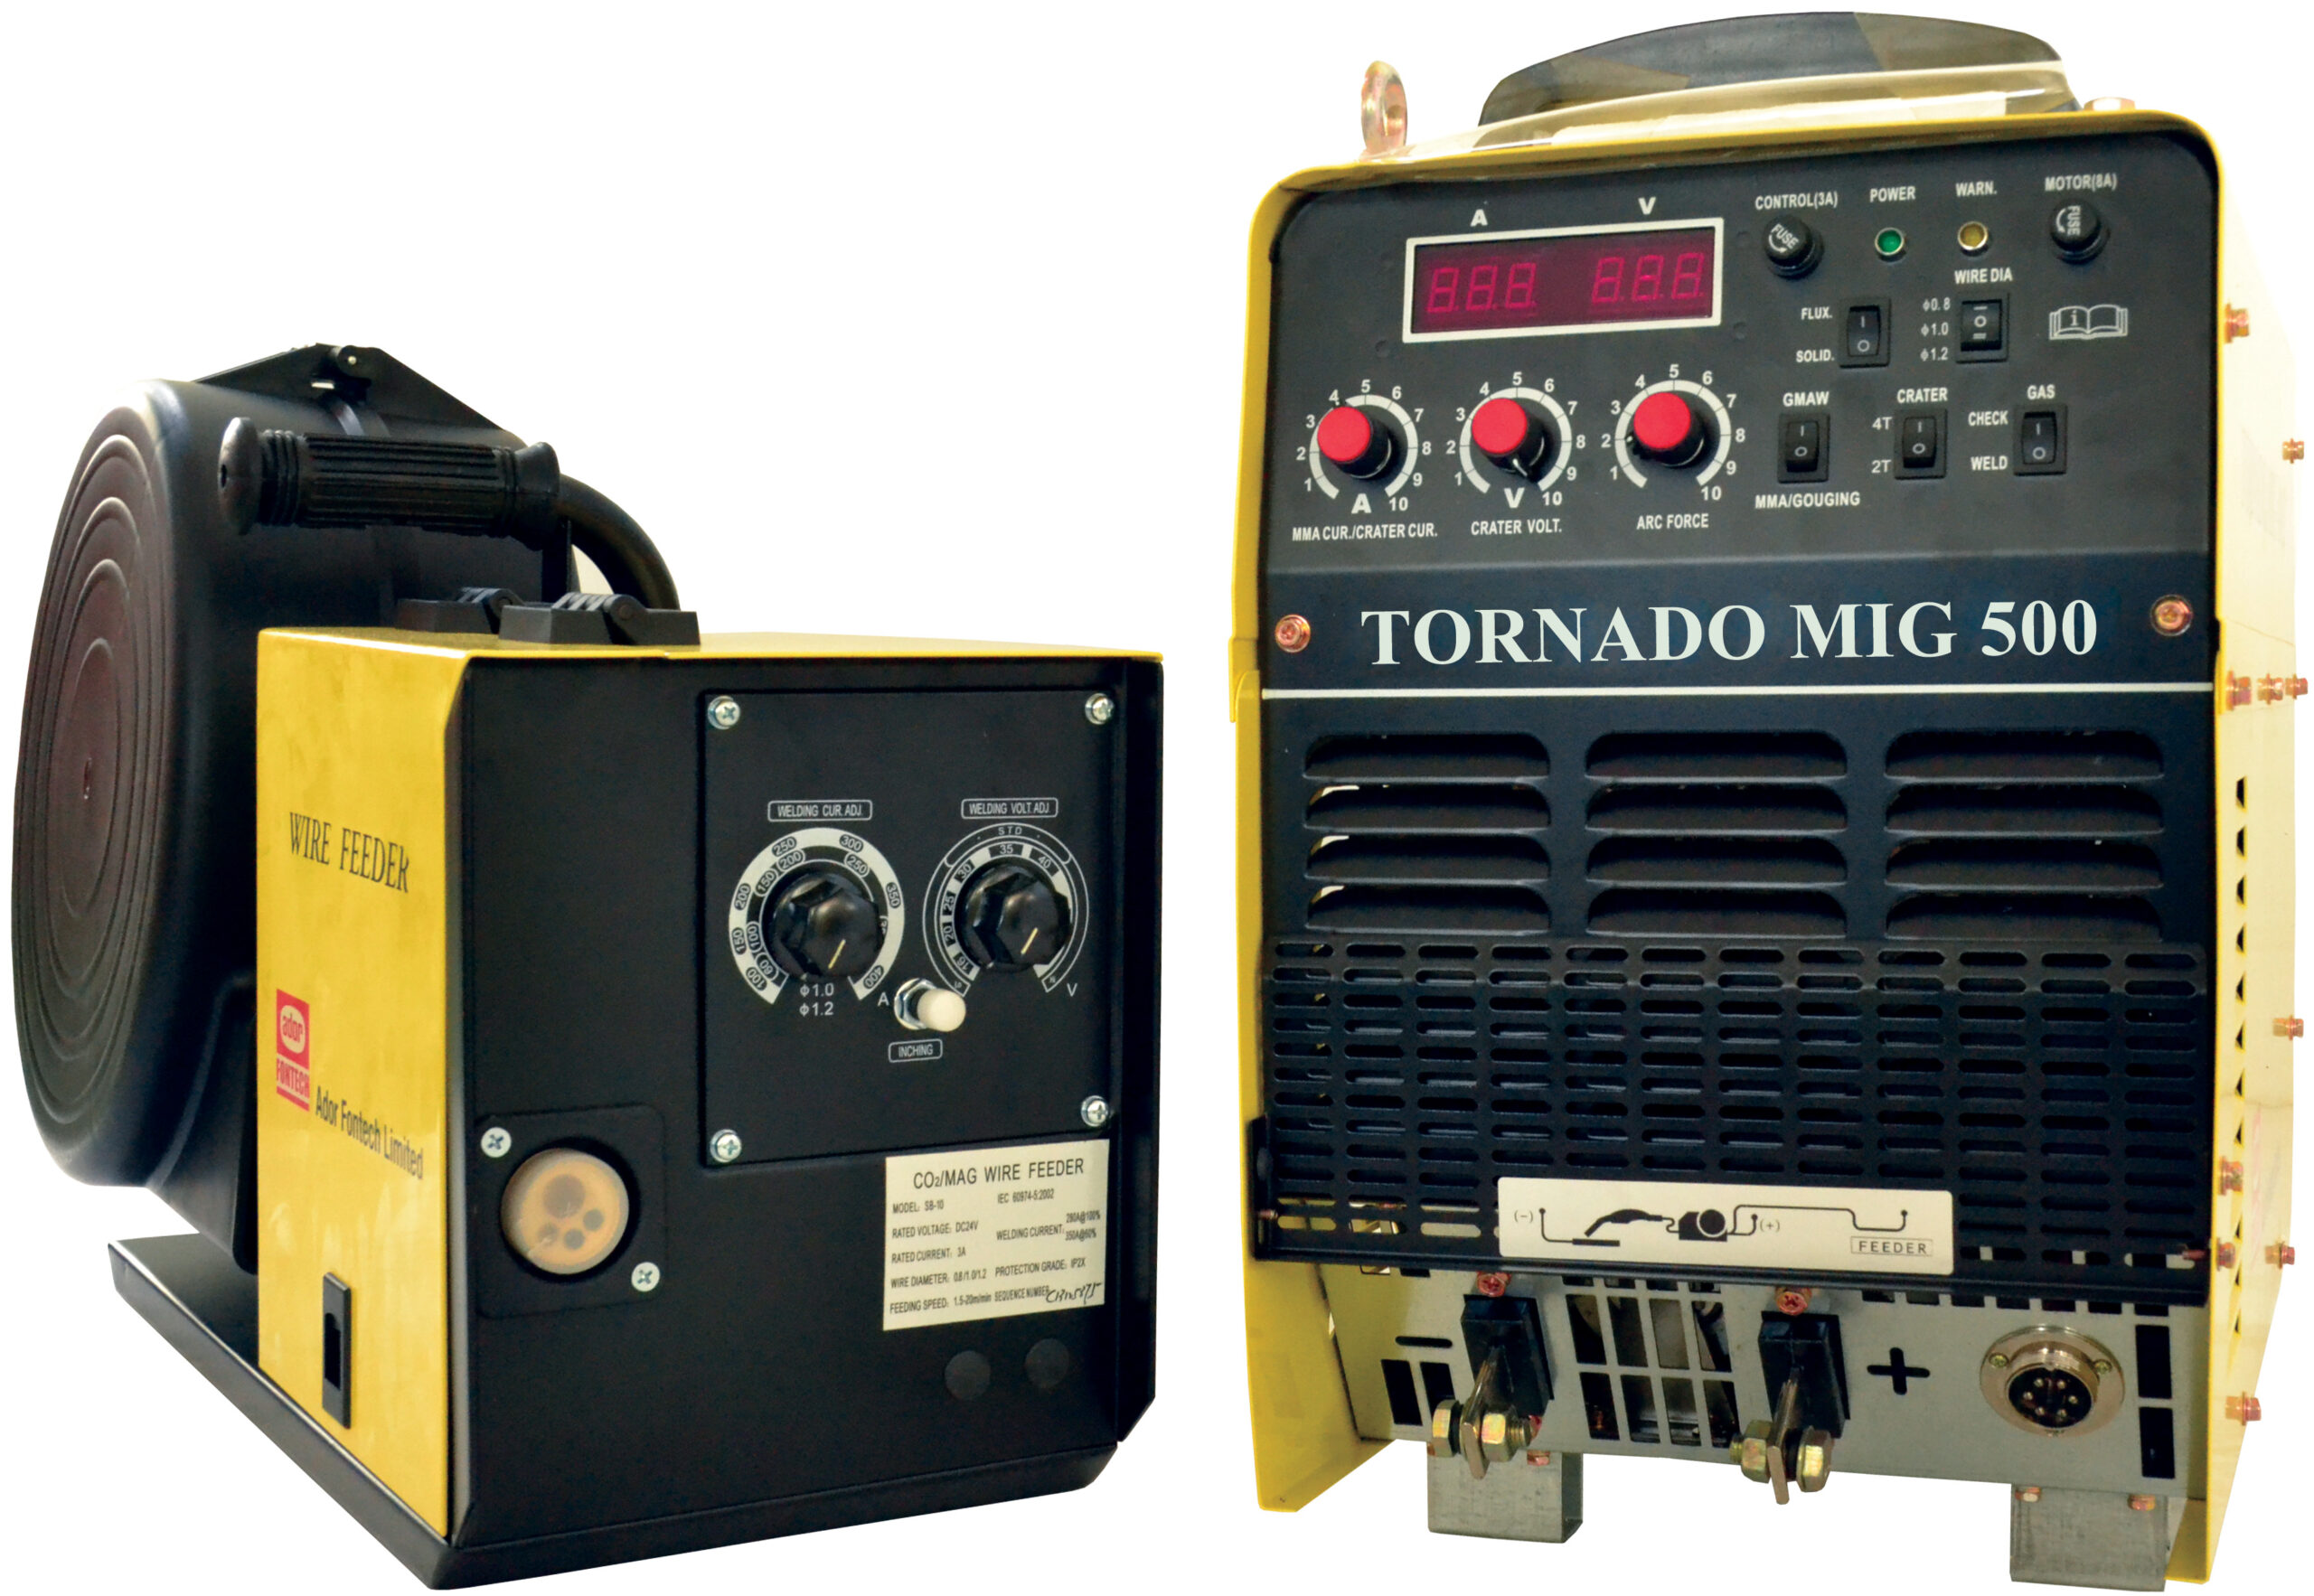 Tornado MIG 500 scaled